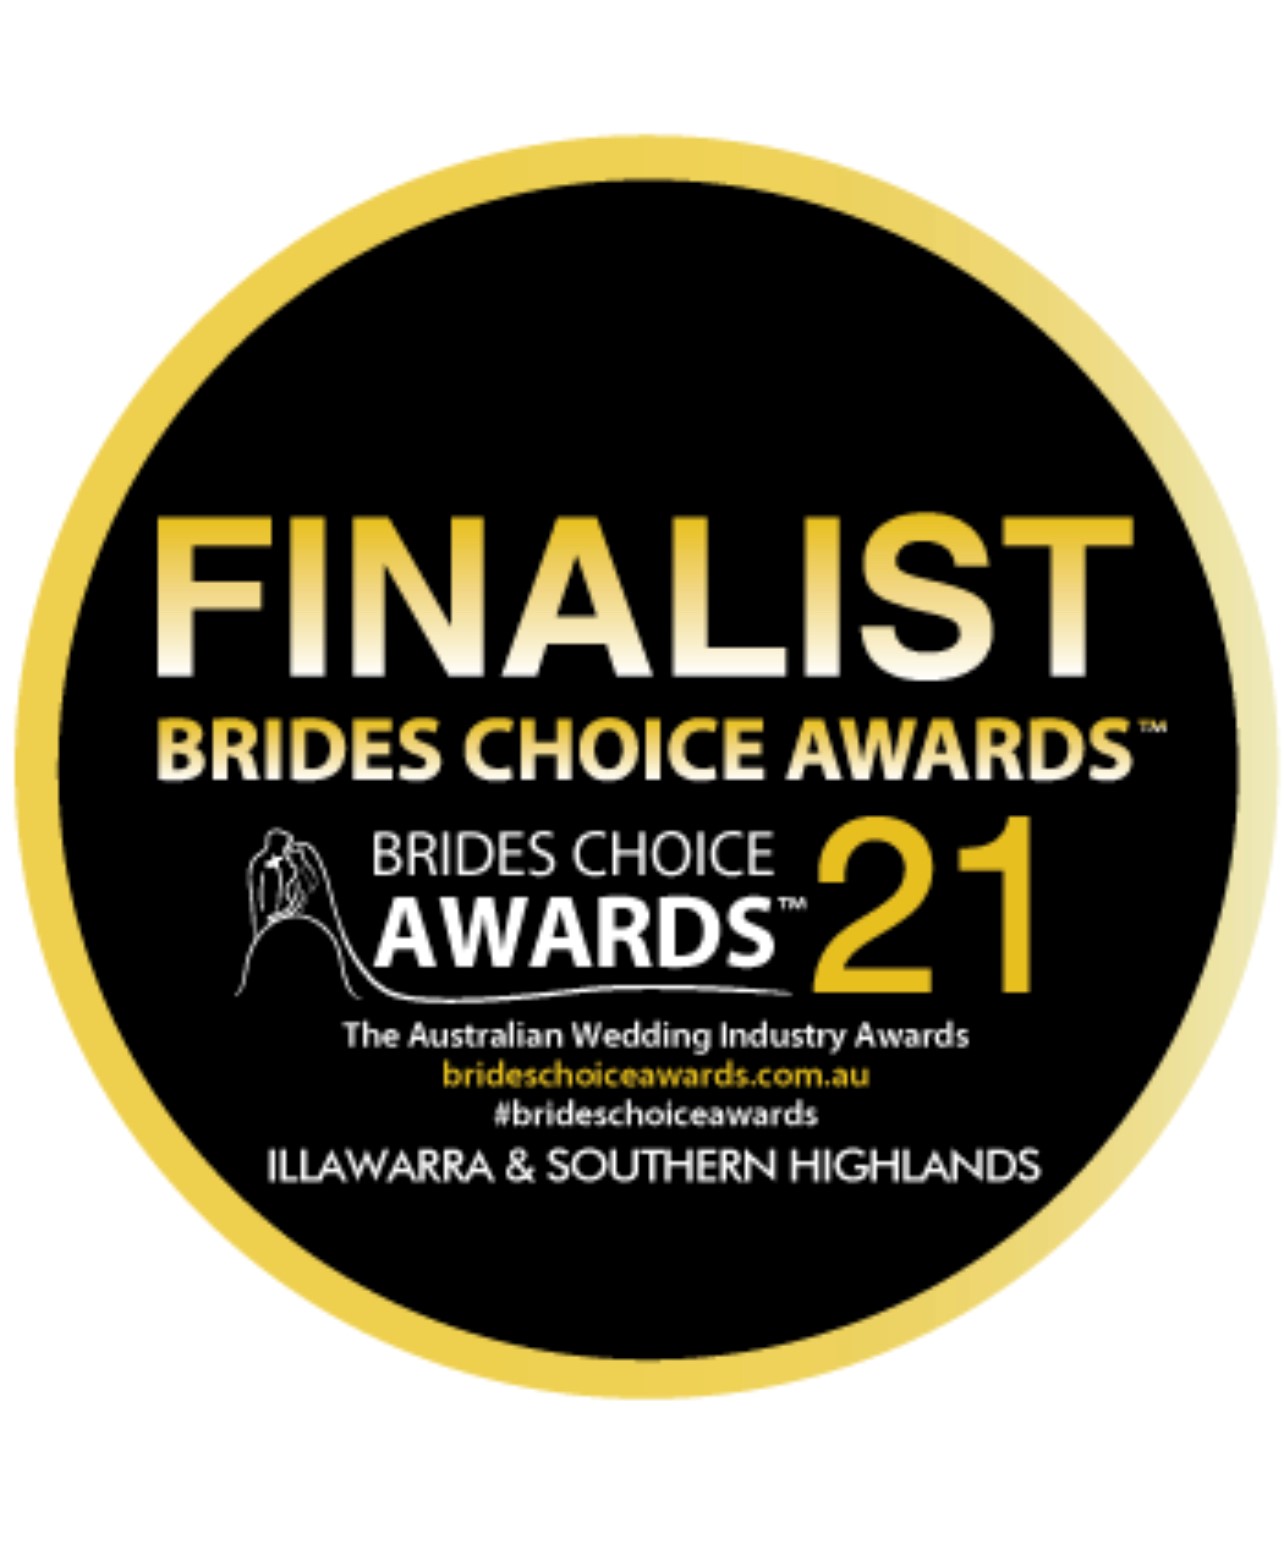 Finalist Brides Choice Awards 2021